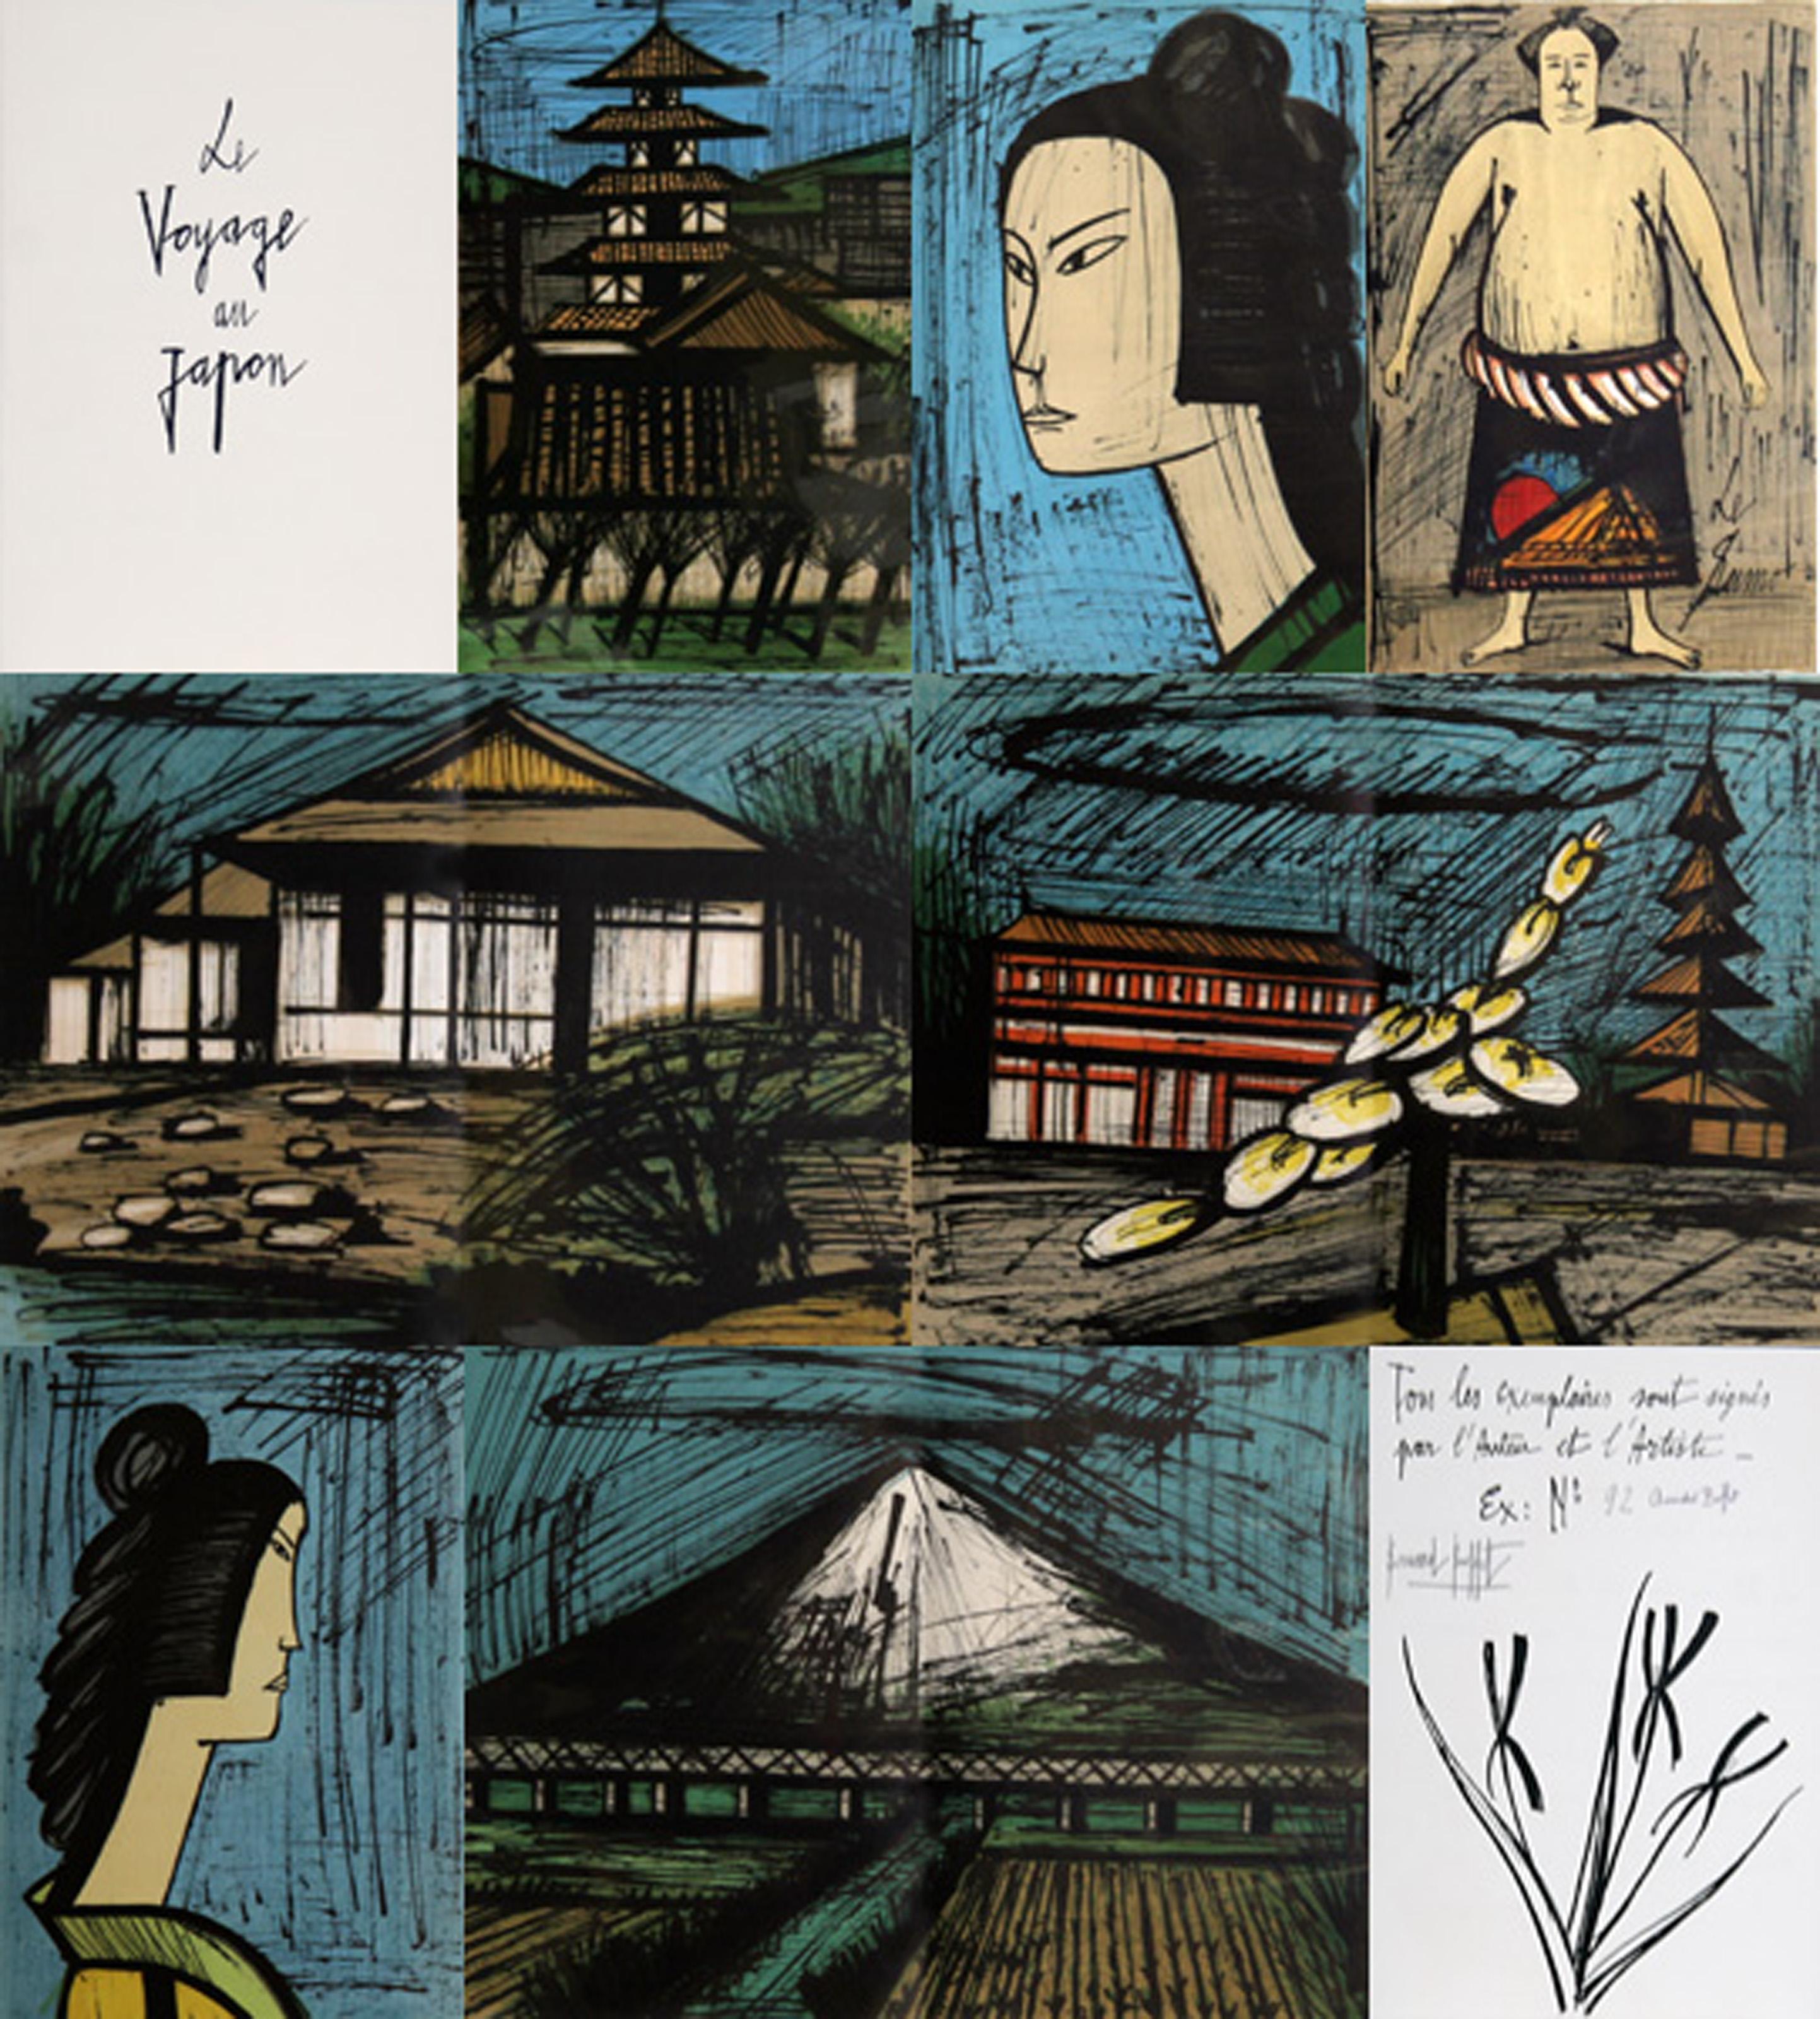 Le Voyage au Japon Portfolio, Portfolio Book with 24 Lithographs by Buffet - Print by Bernard Buffet